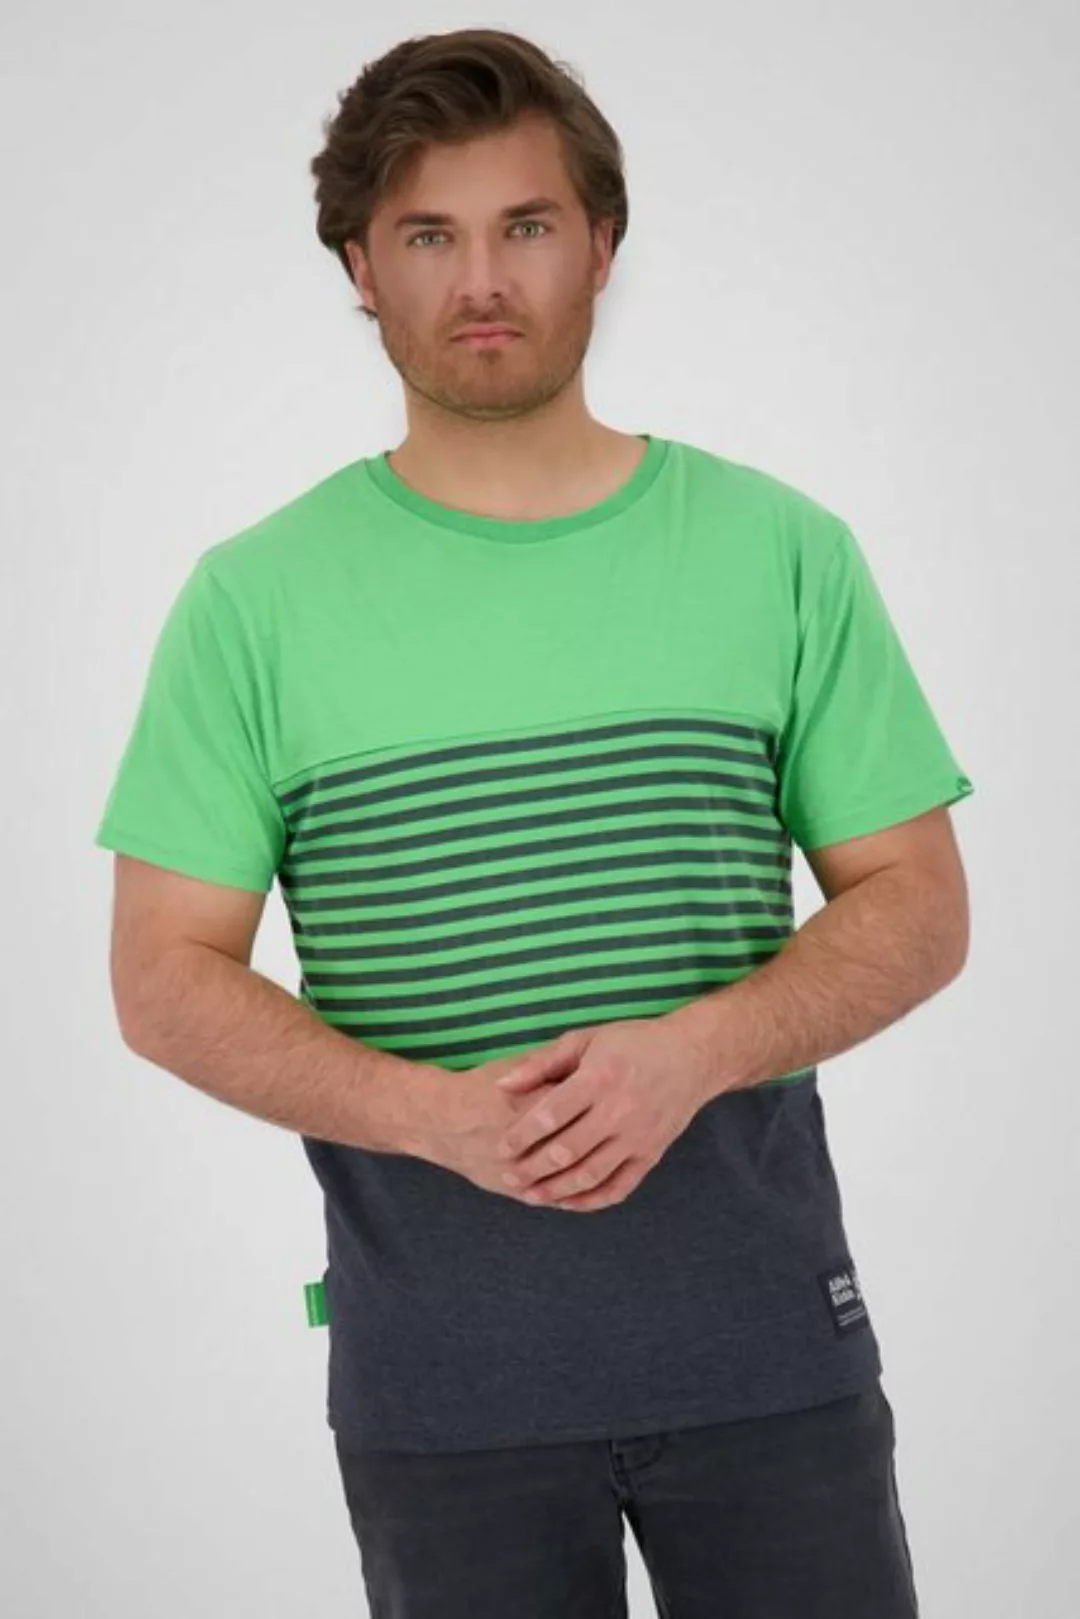 Alife & Kickin T-Shirt BenAK B Shirt Herren T-Shirt günstig online kaufen